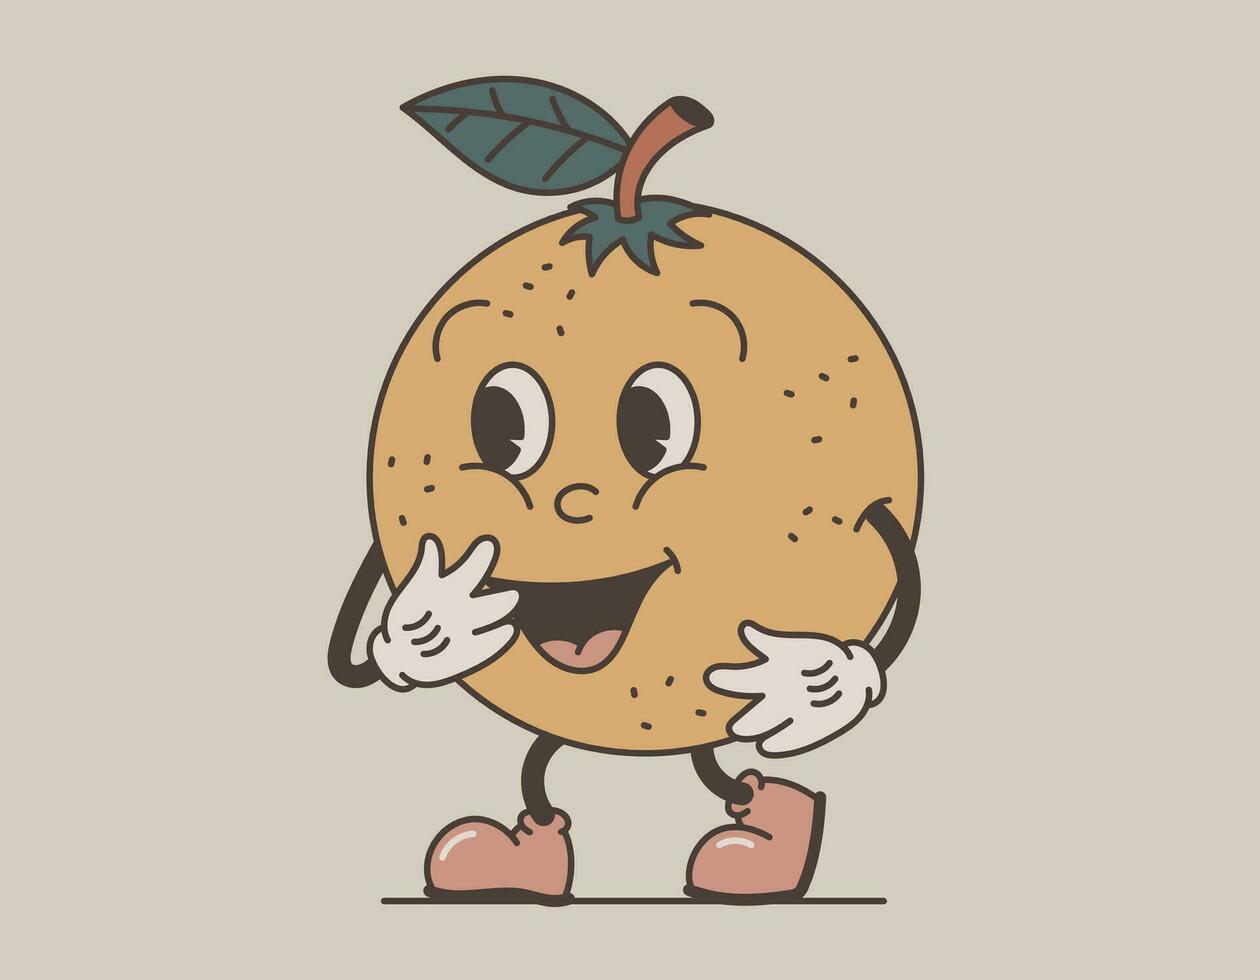 engraçado groovy retro personagem sorridente laranja. vetor isolado engraçado fruta, velho desenho animado estilo.